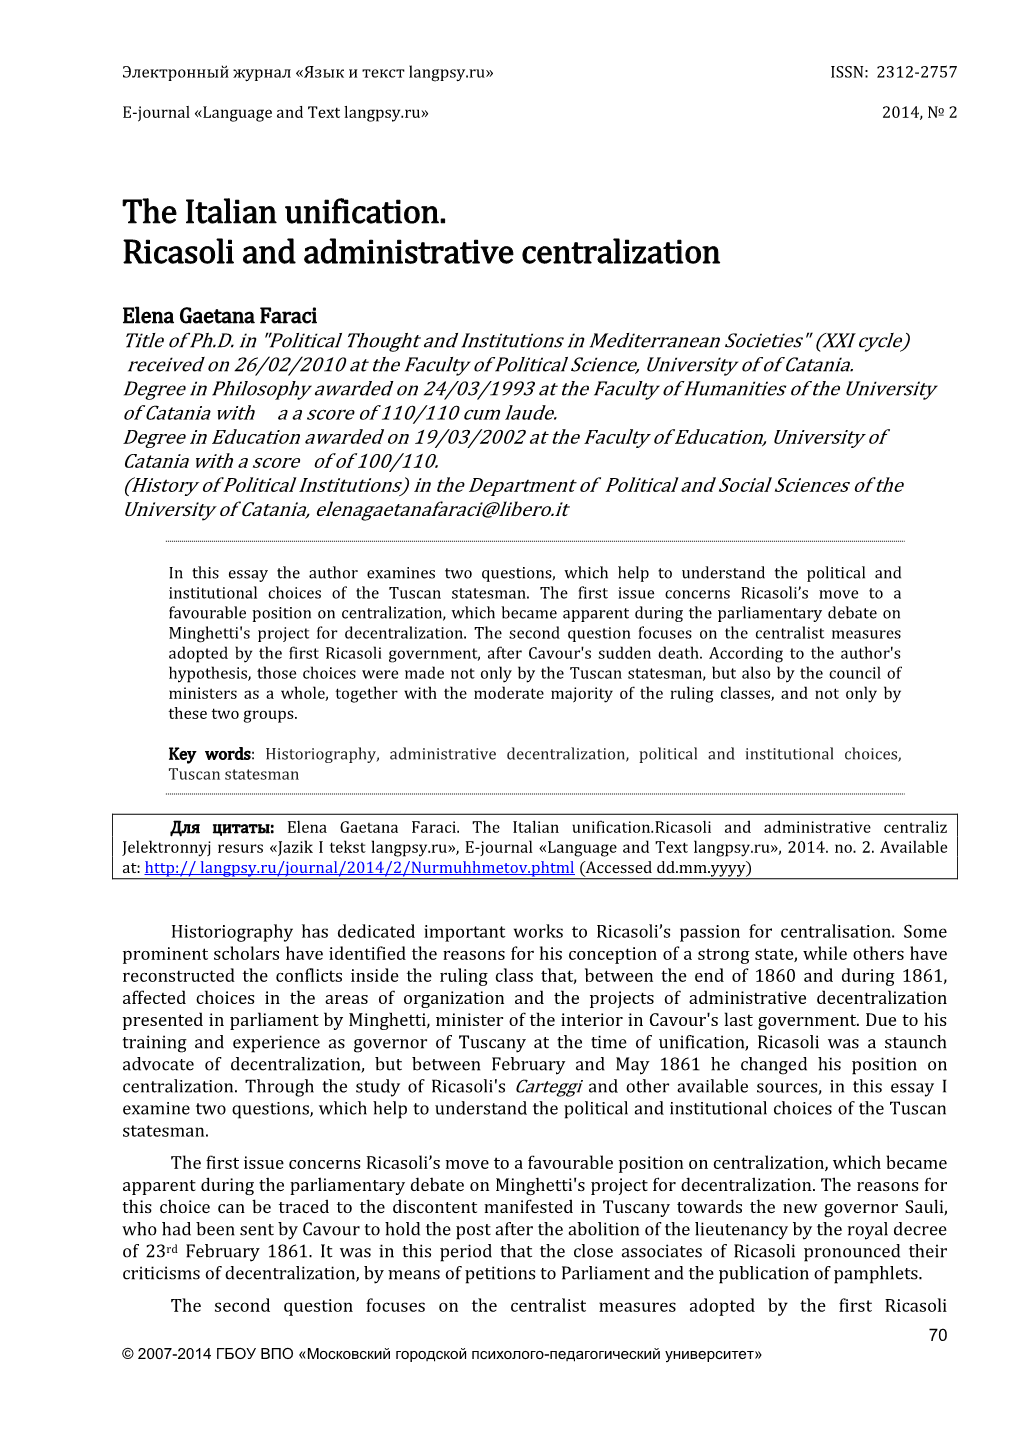 The Italian Unification. Ricasoli and Administrative Centralization